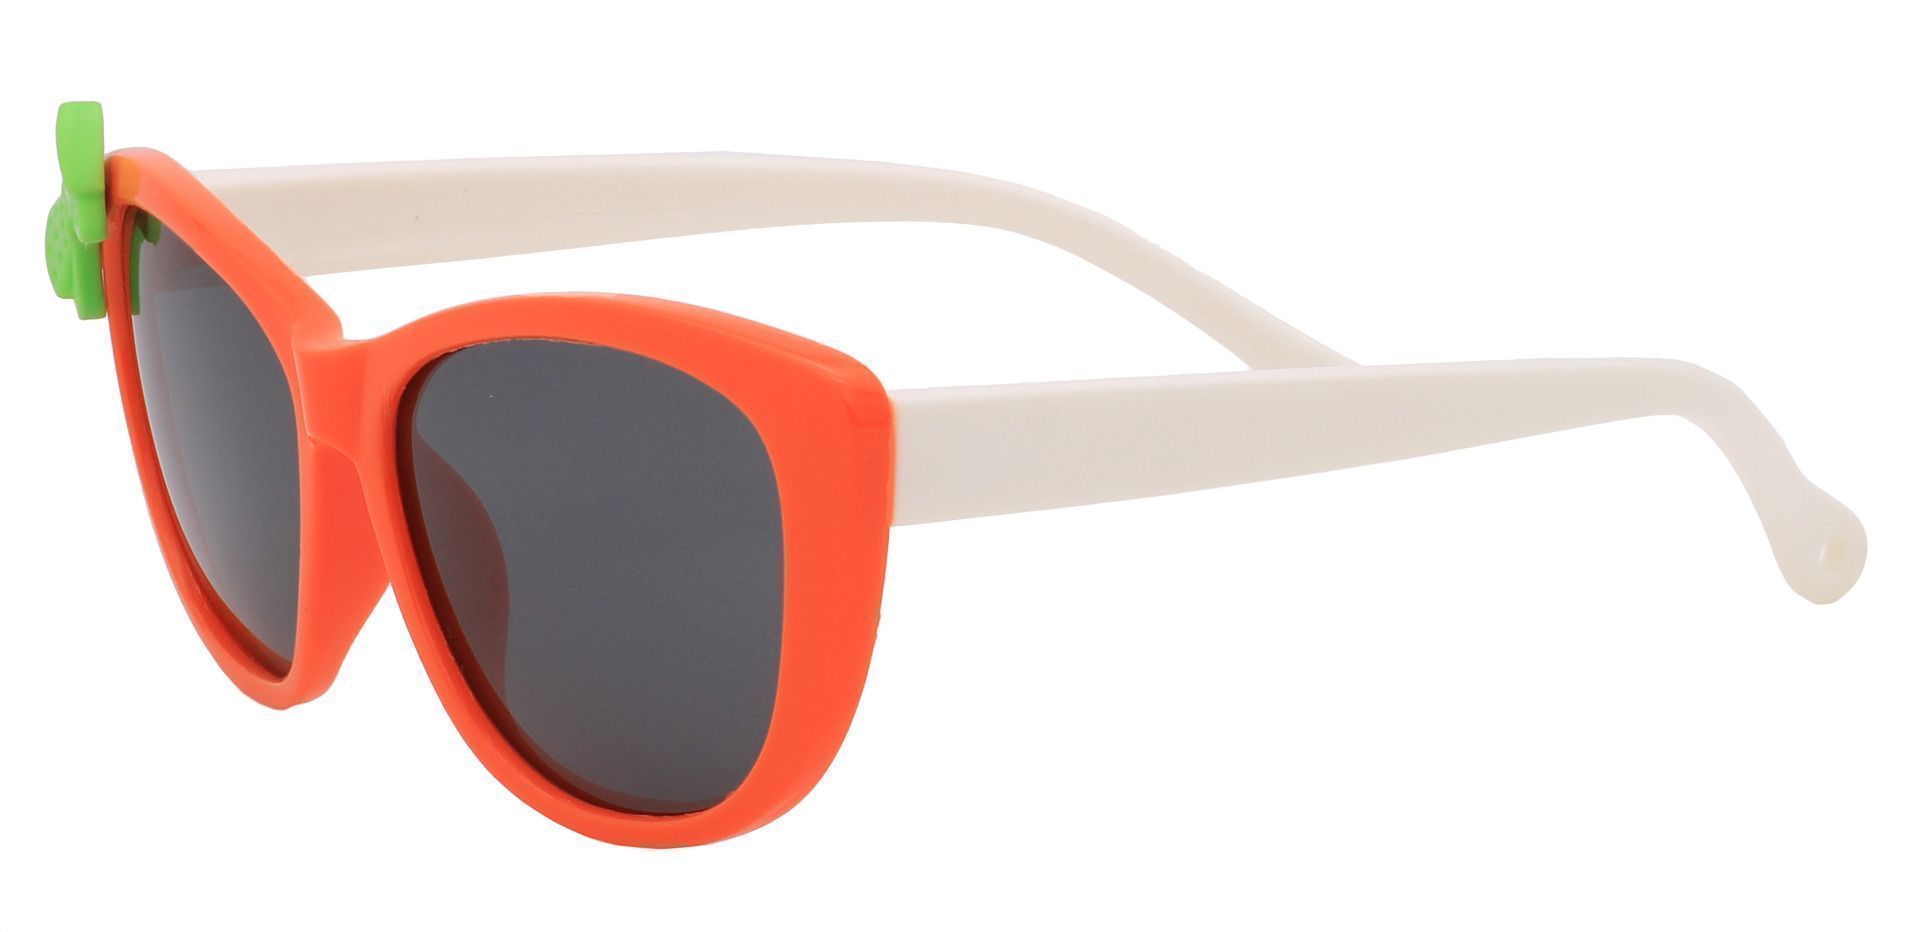 Mandarin Square Non-Rx Sunglasses - Orange Frame With Gray Lenses